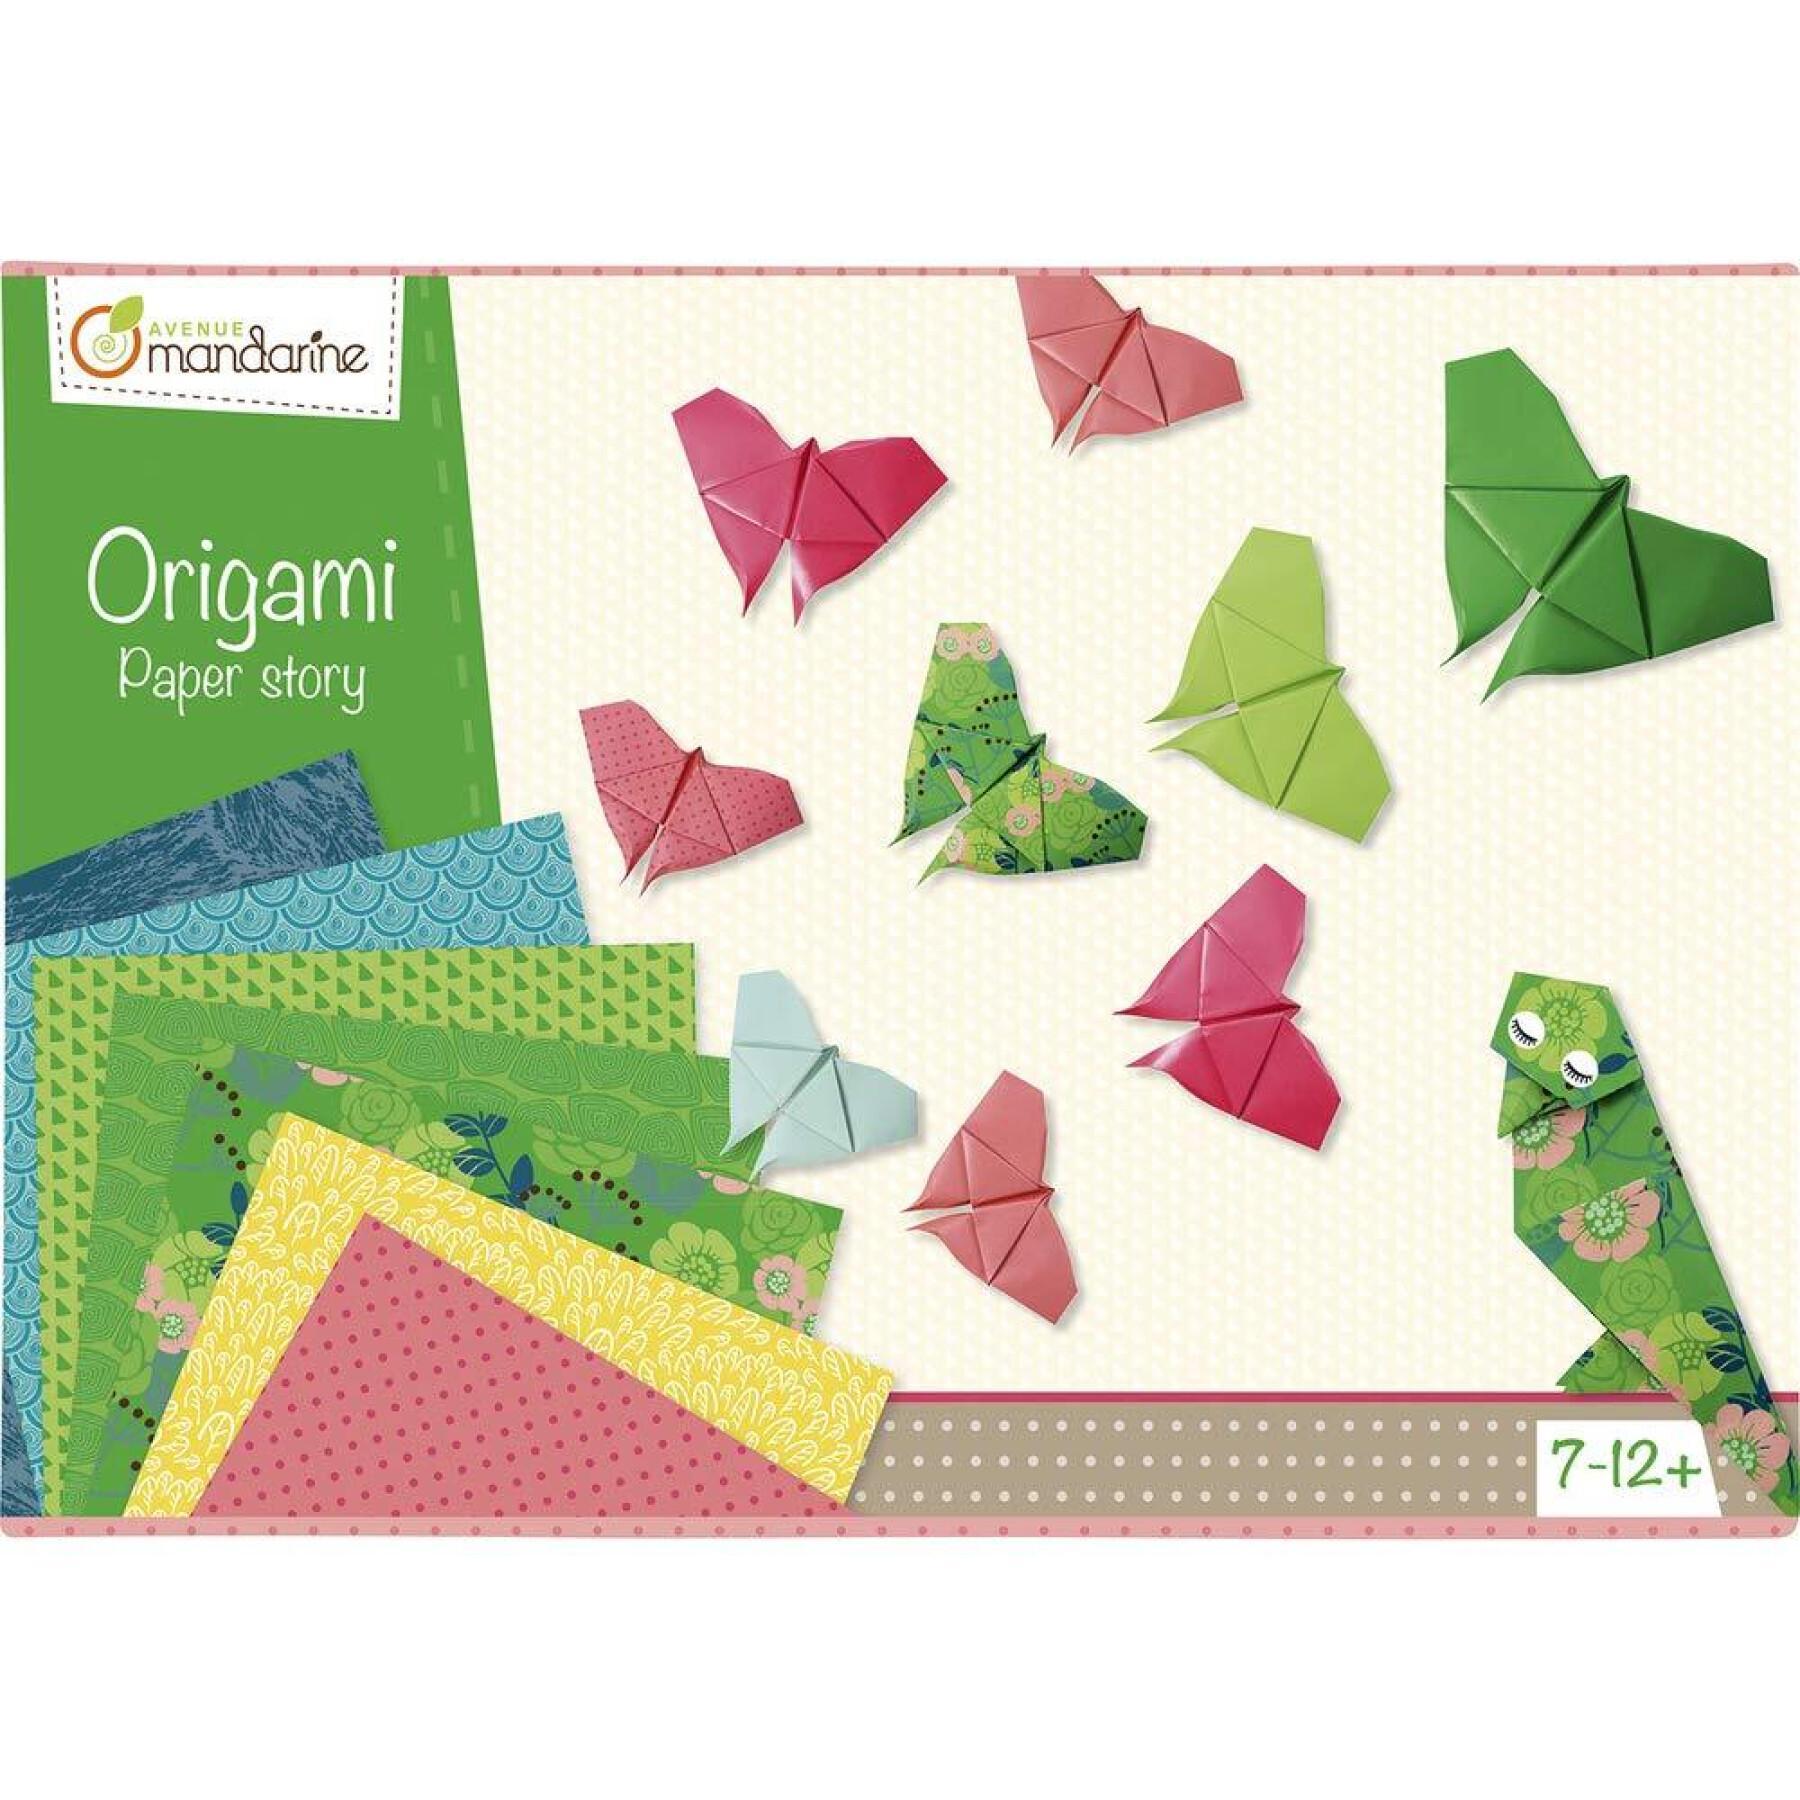 Caixa criativa de origami Avenue Mandarine